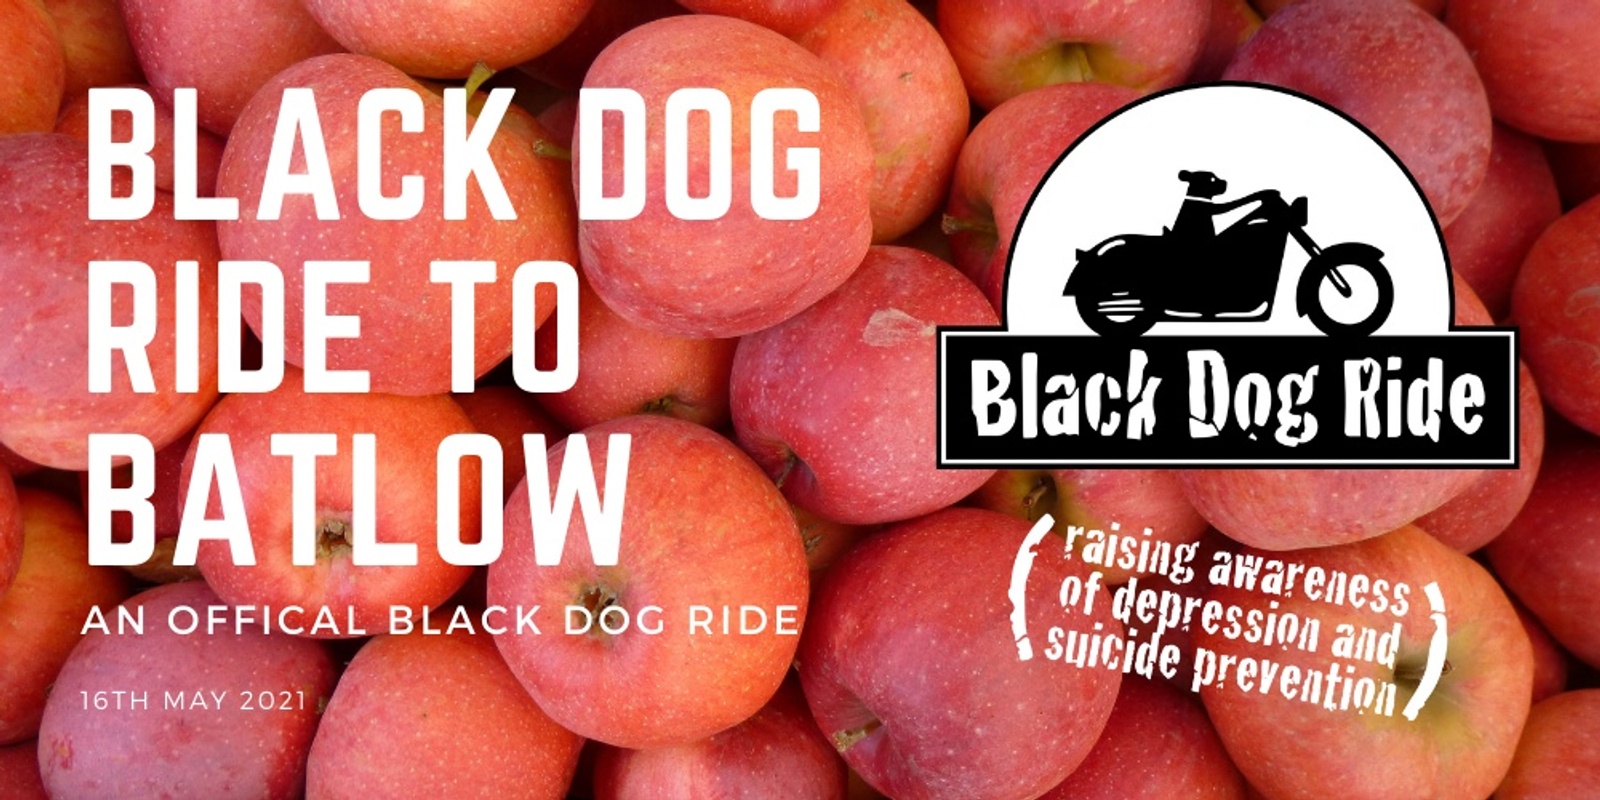 Banner image for Black Dog Ride to Batlow